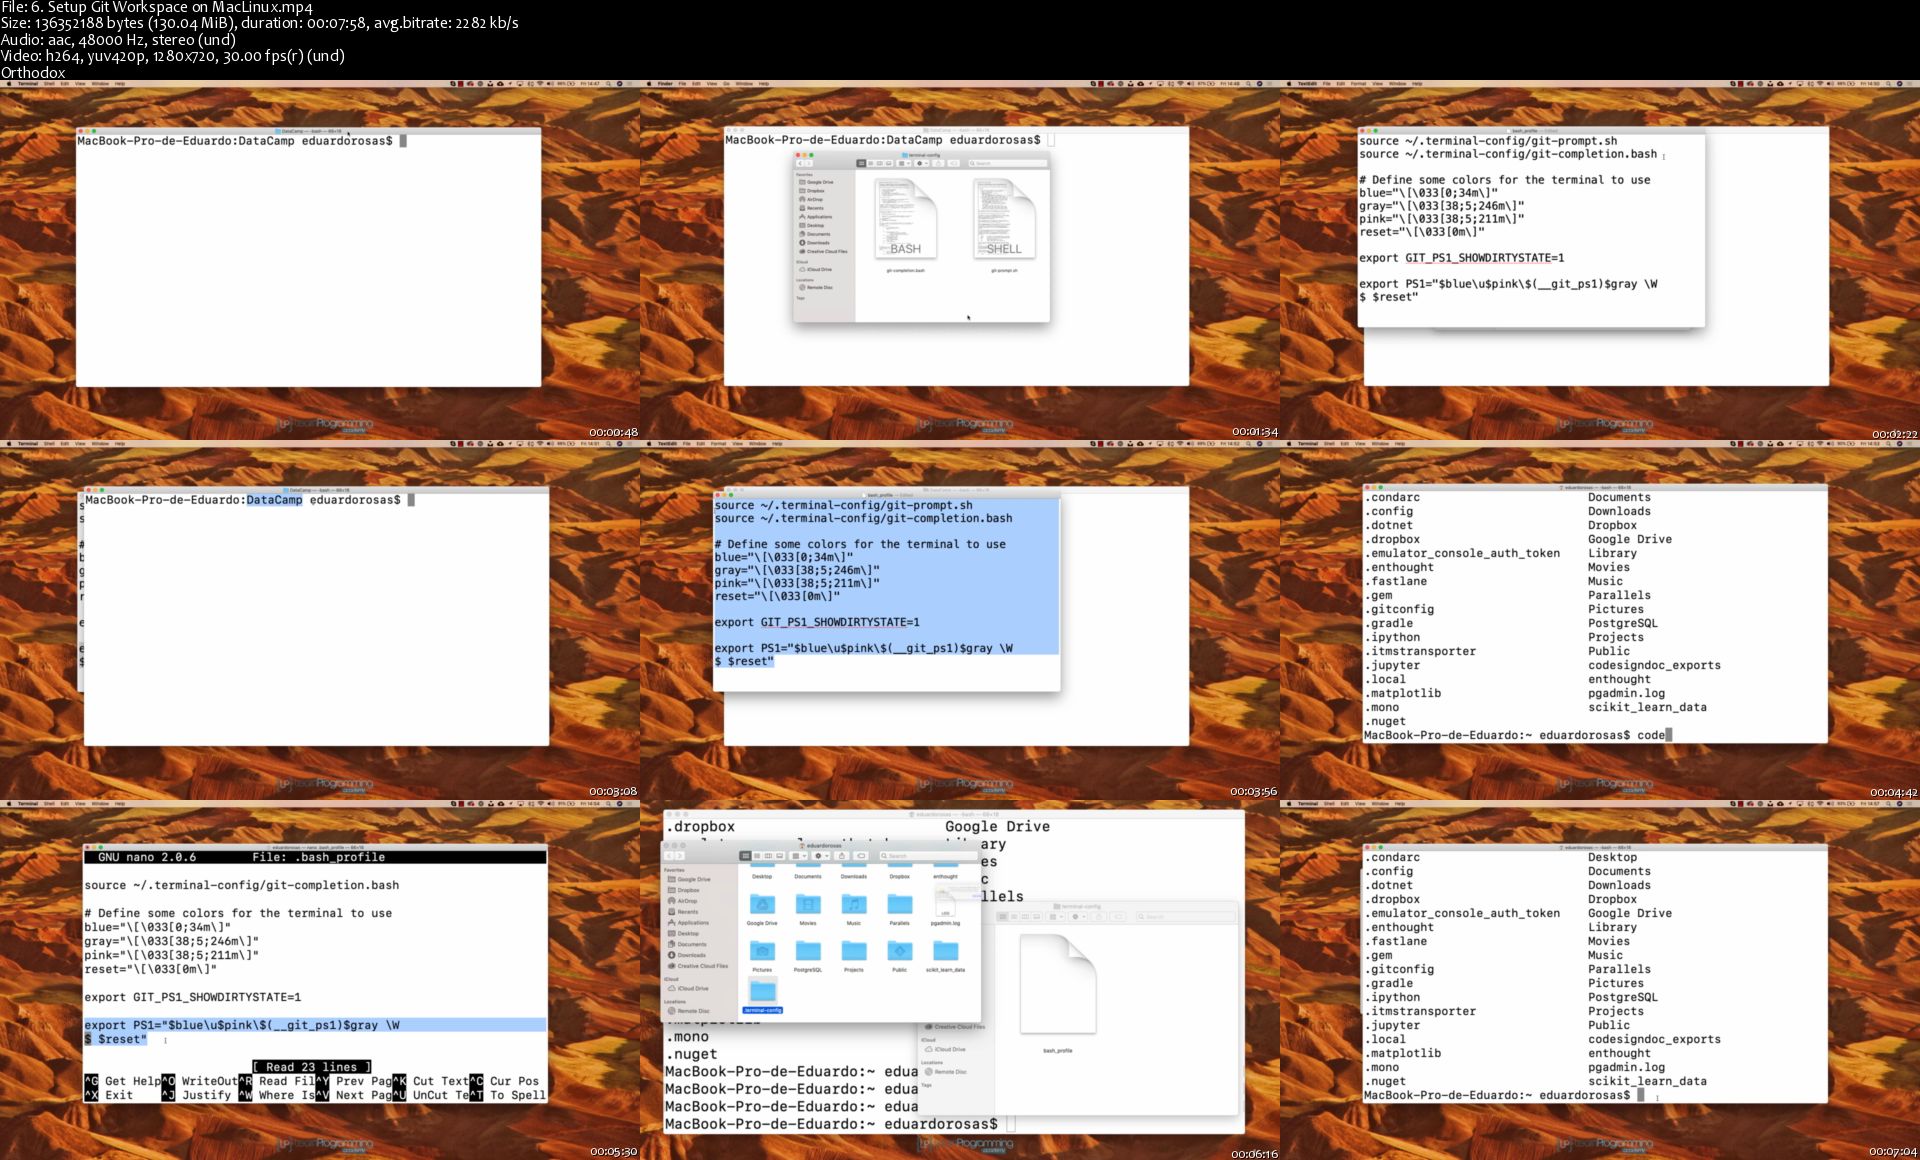 6-Setup-Git-Workspace-on-Mac-Linux-s.jpg